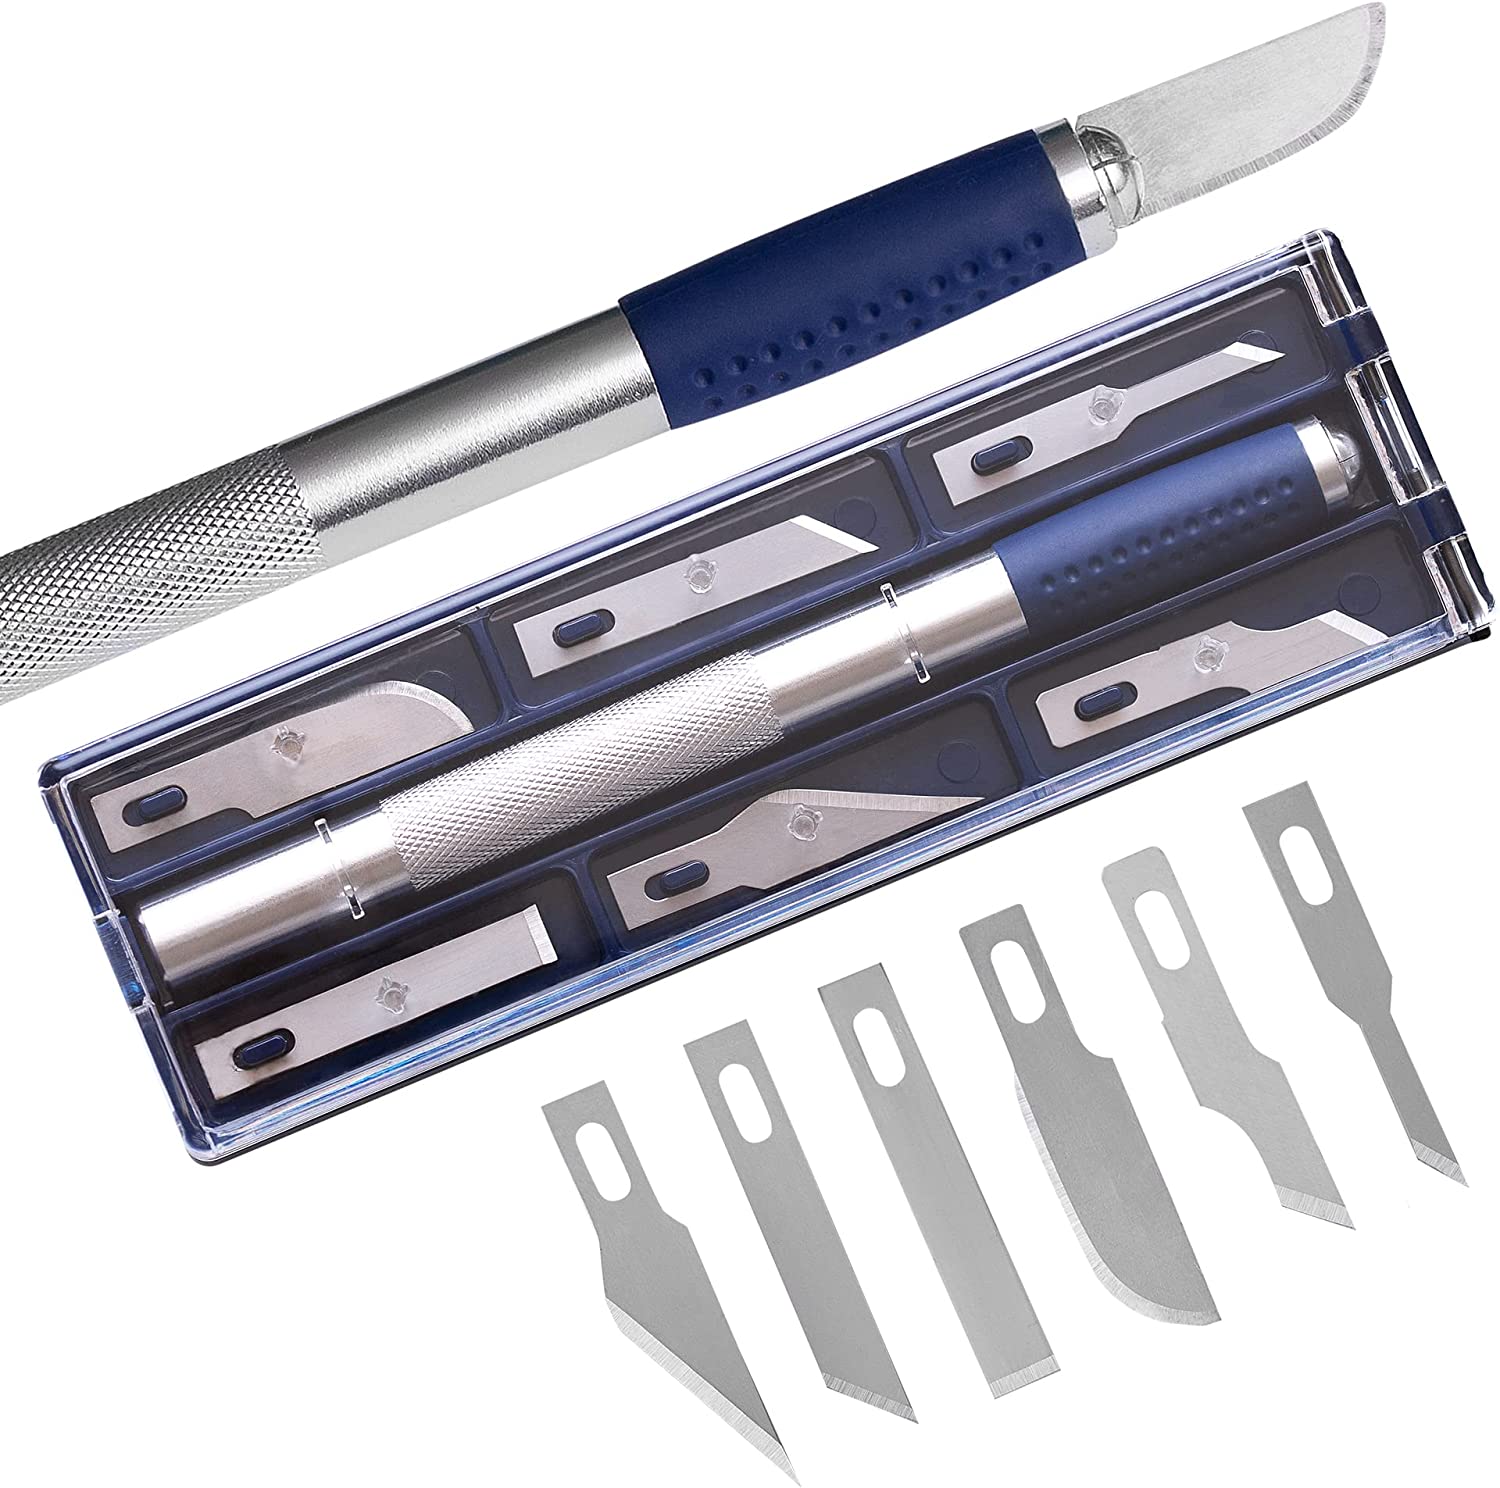 DIYSELF Precision Exacto Knife Upgrade Precision Carving Craft Knife Hobby Knife Exacto Knife Kit